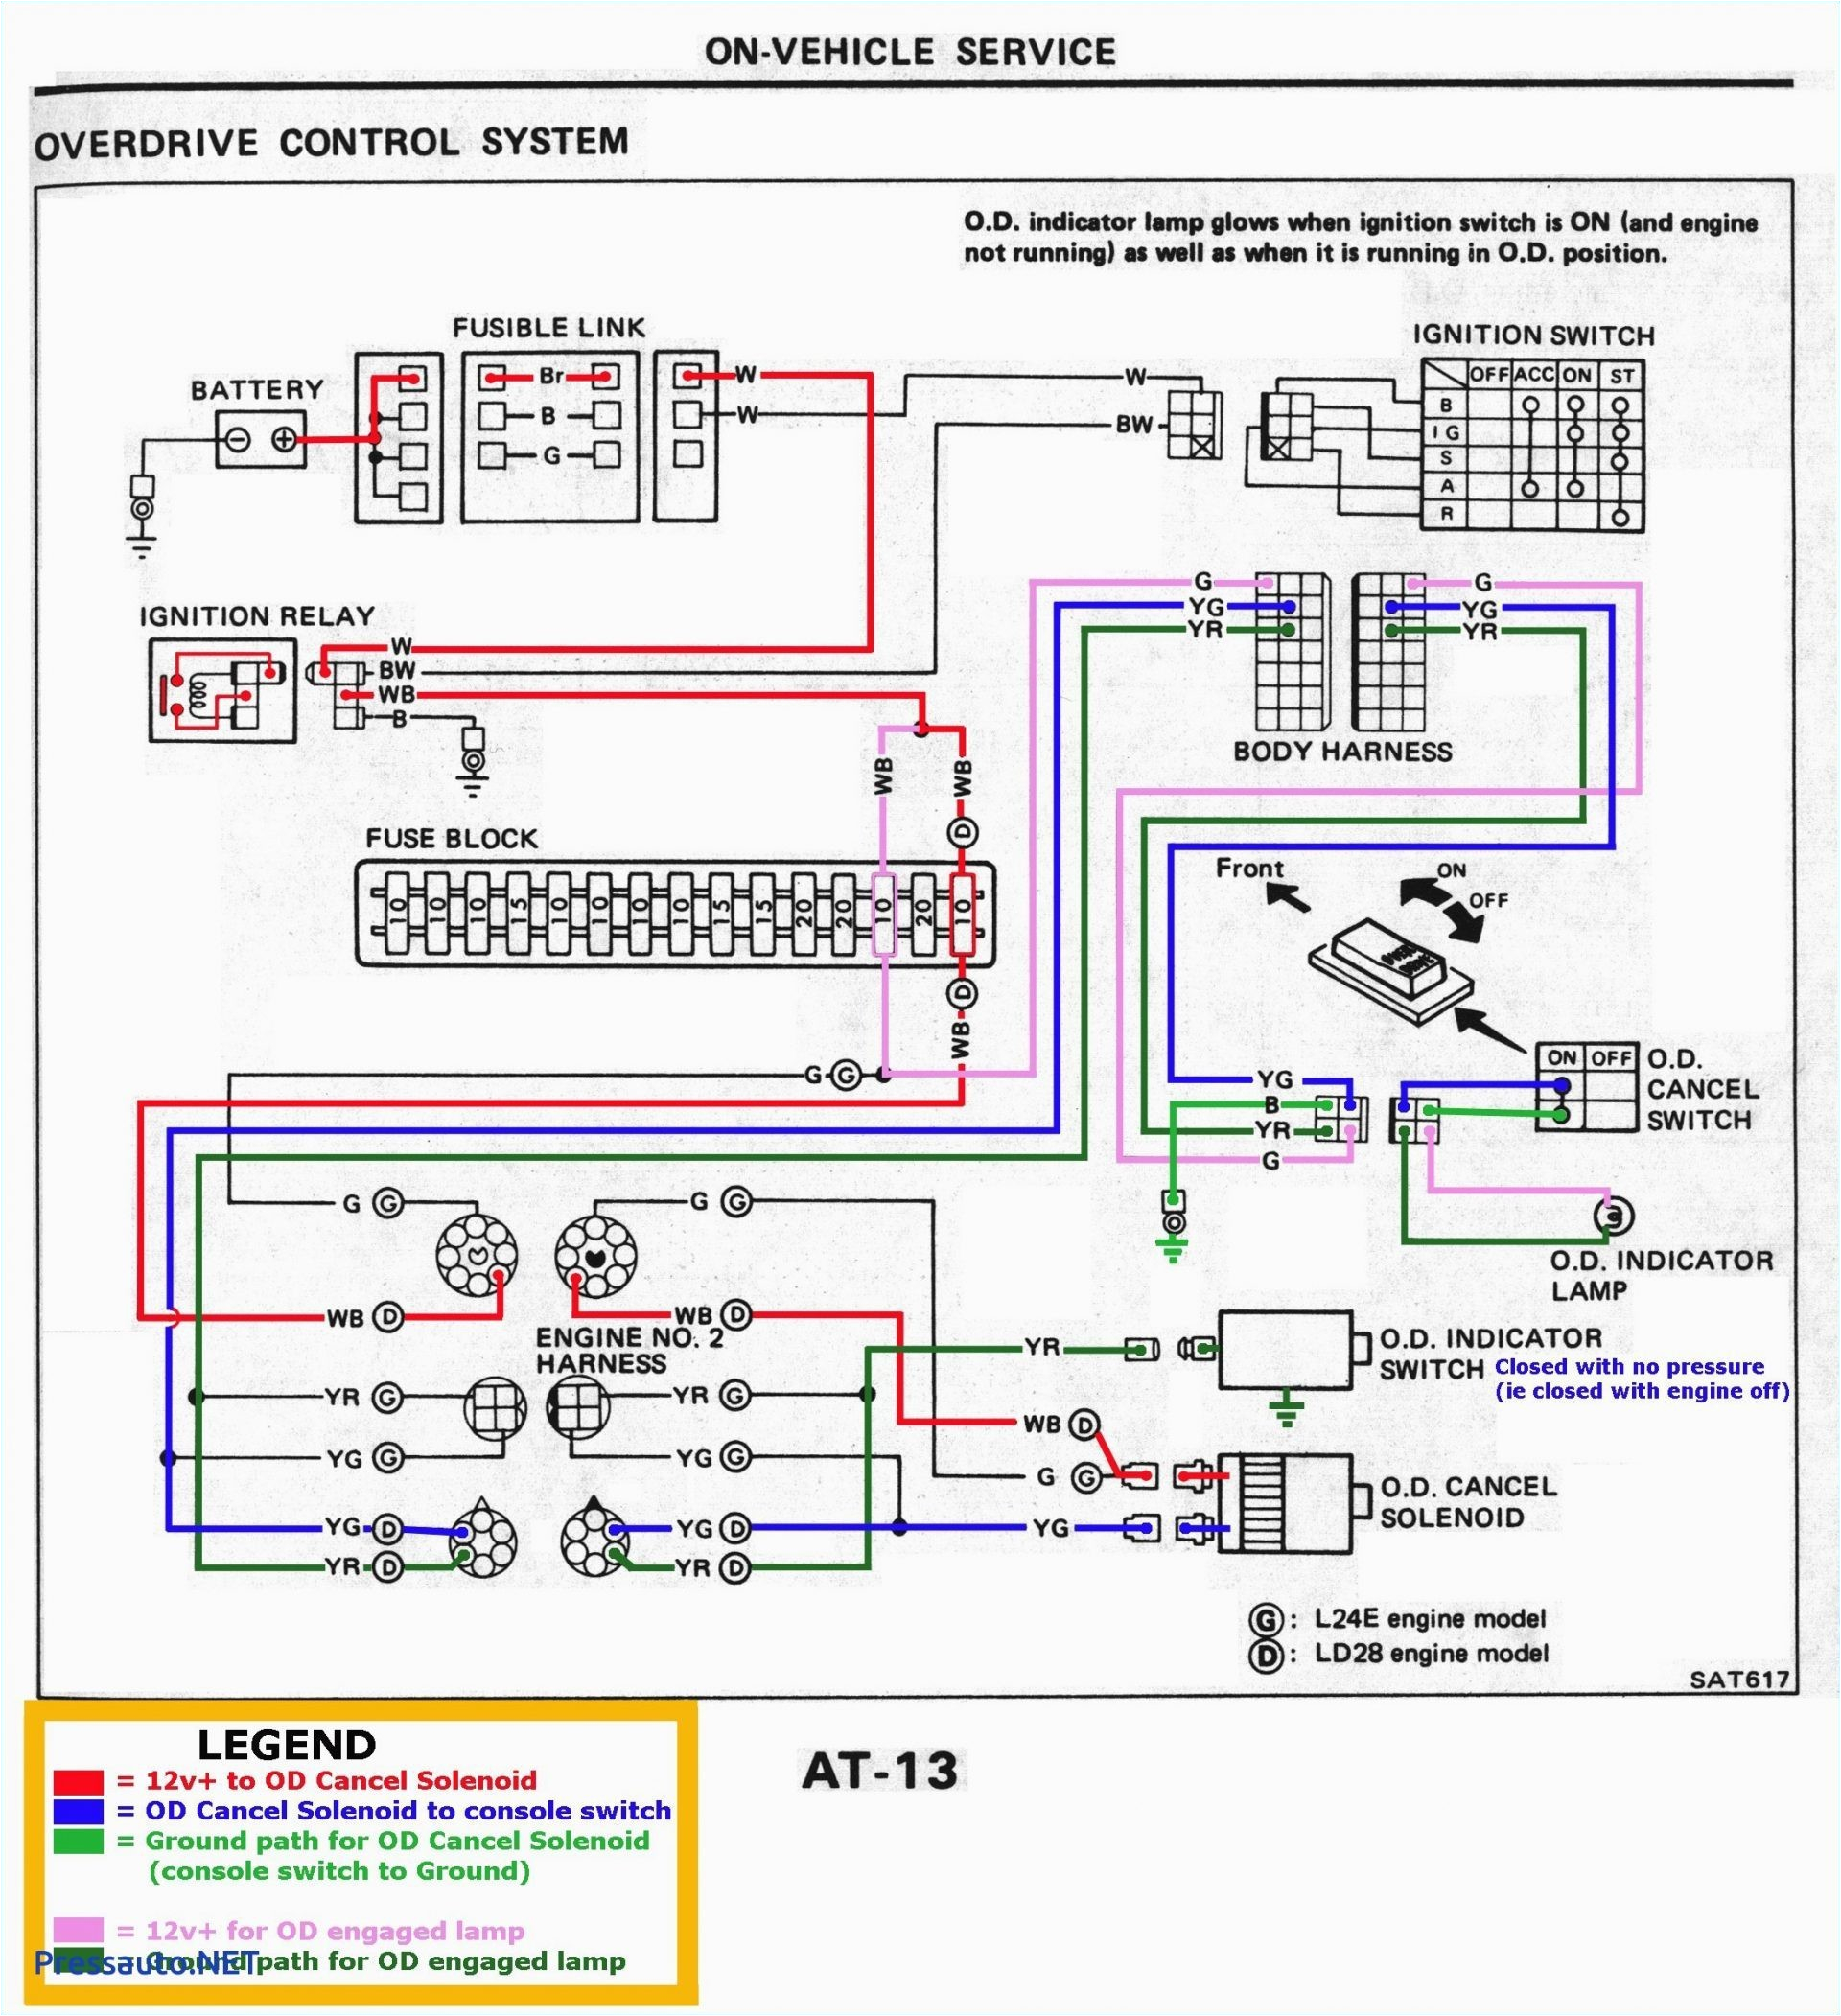 honeywell fan limit switch wiring diagram wiring diagram garbage disposal switch fresh wiring diagram ashdown of honeywell fan limit switch wiring diagram jpg